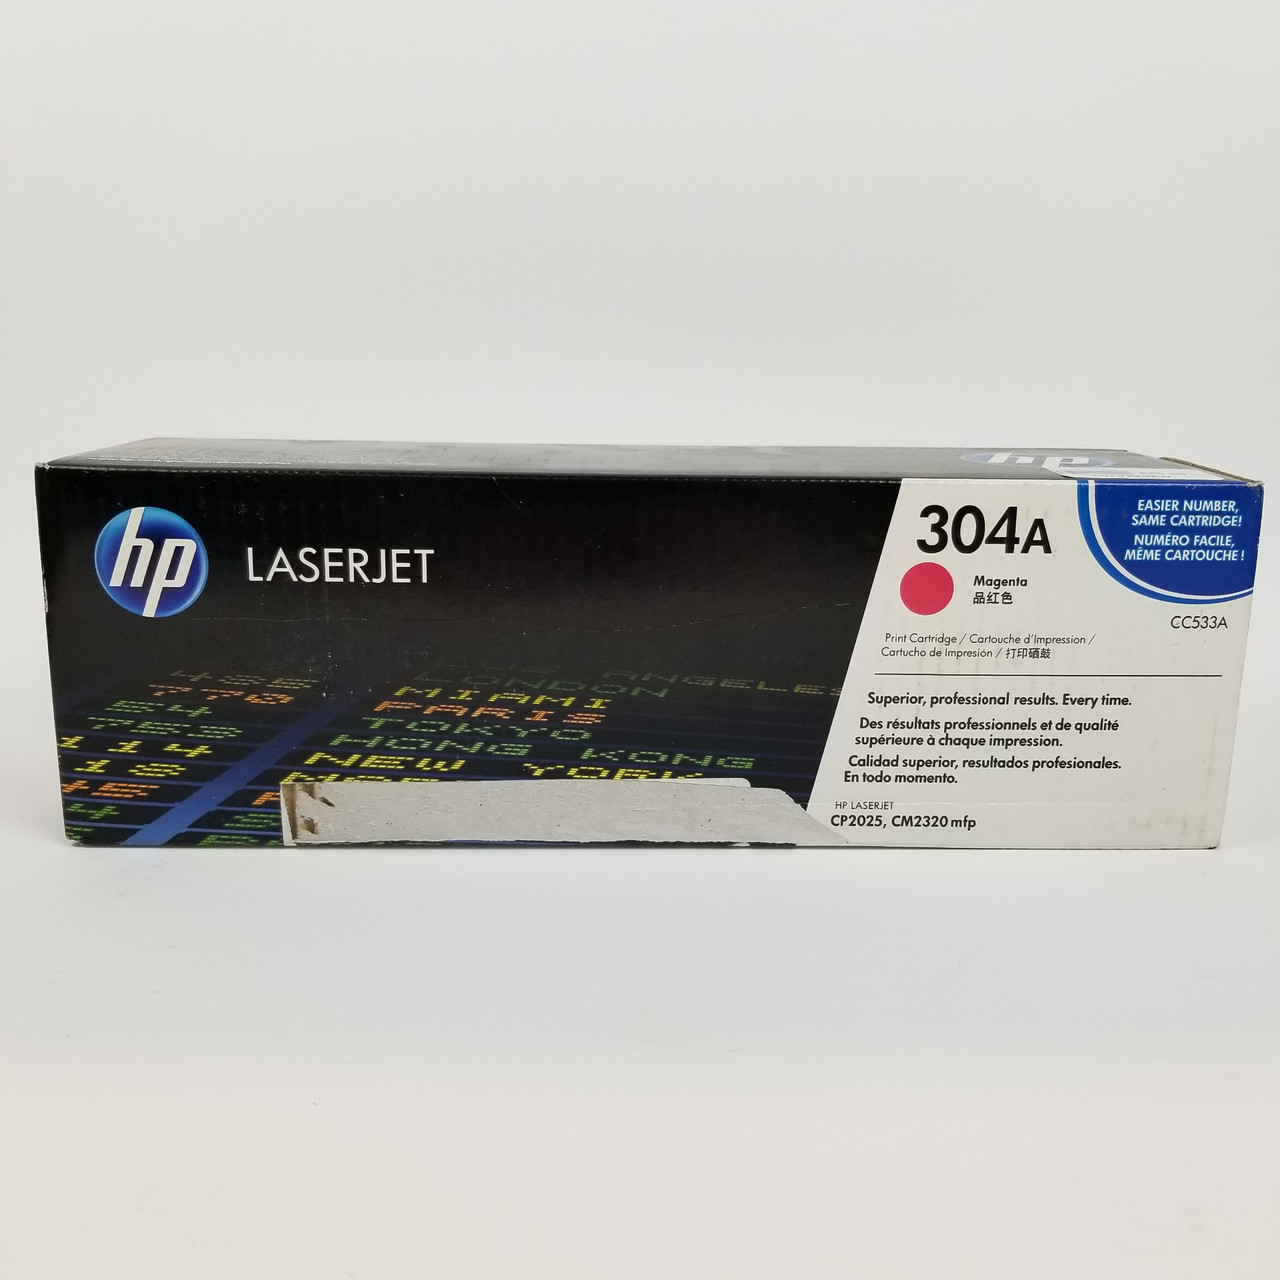 HP Laserjet 304A Magenta Toner | Grade A